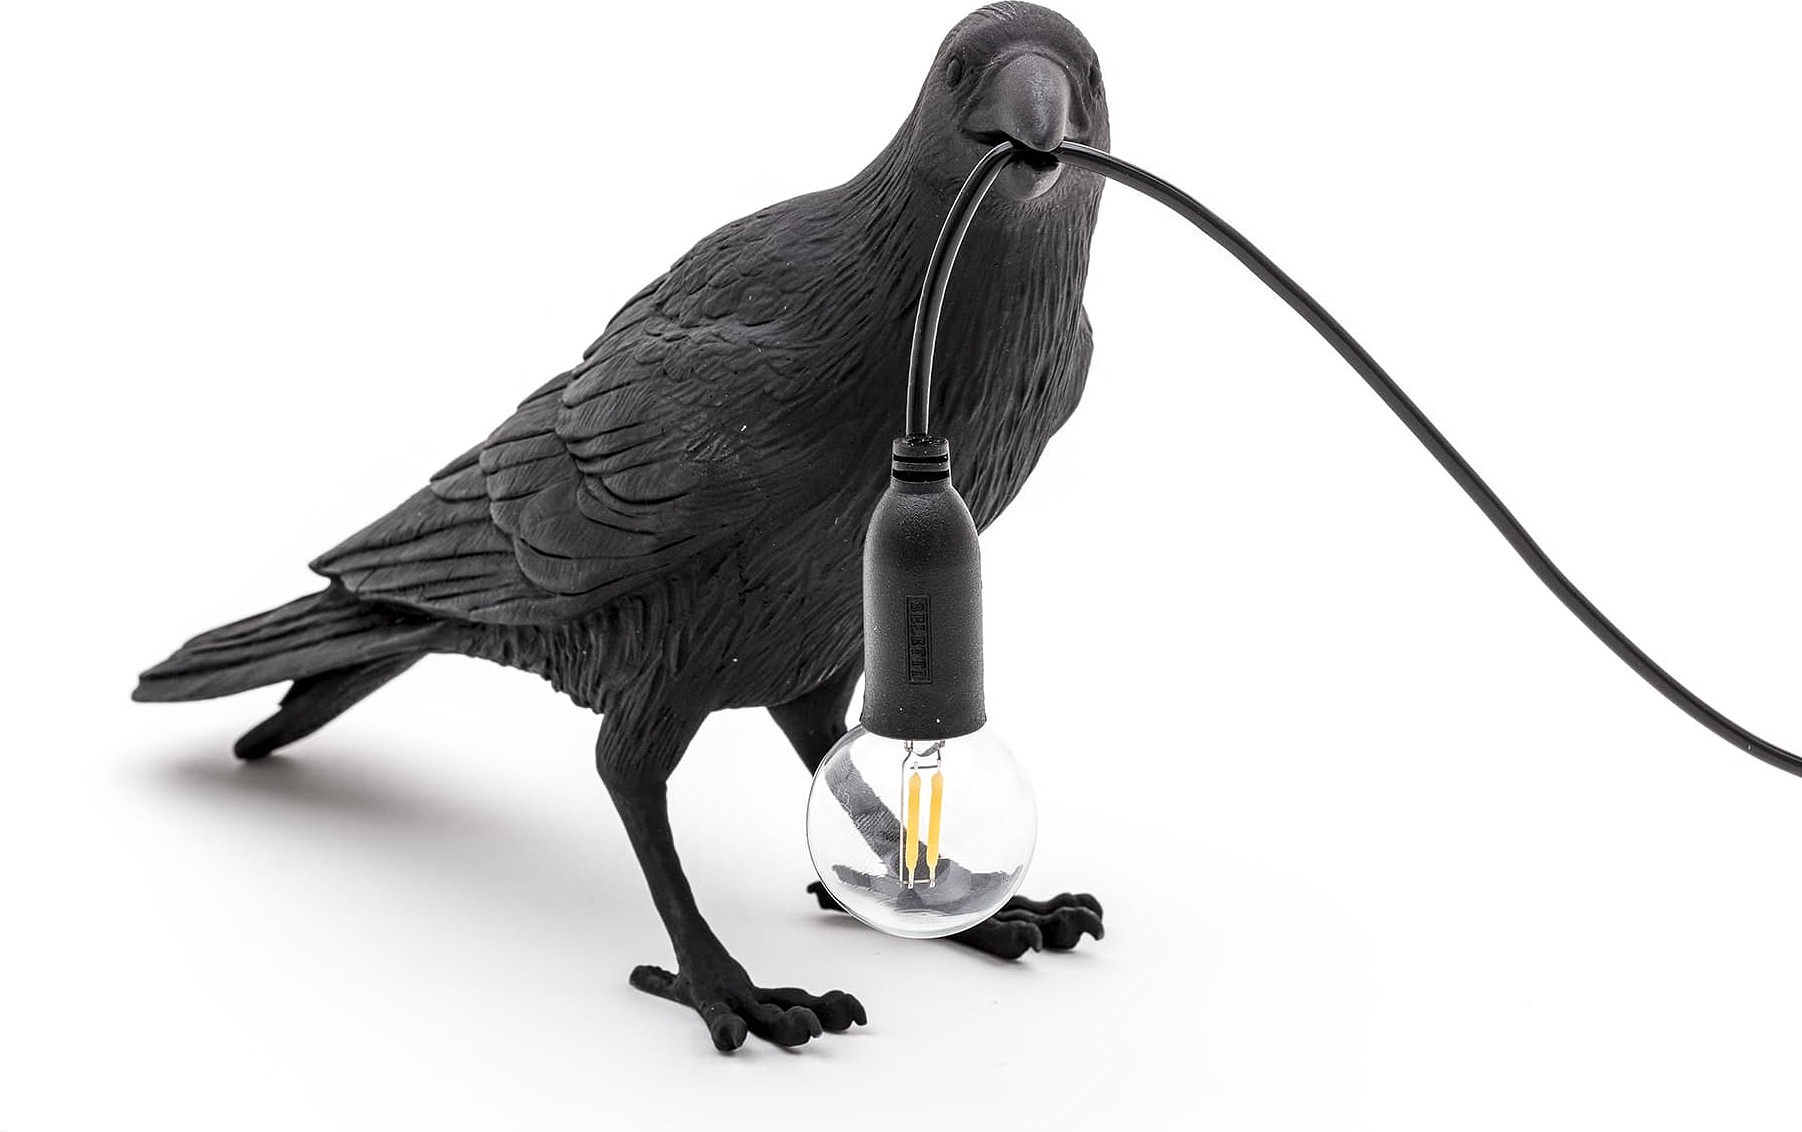 Bird Lamp must